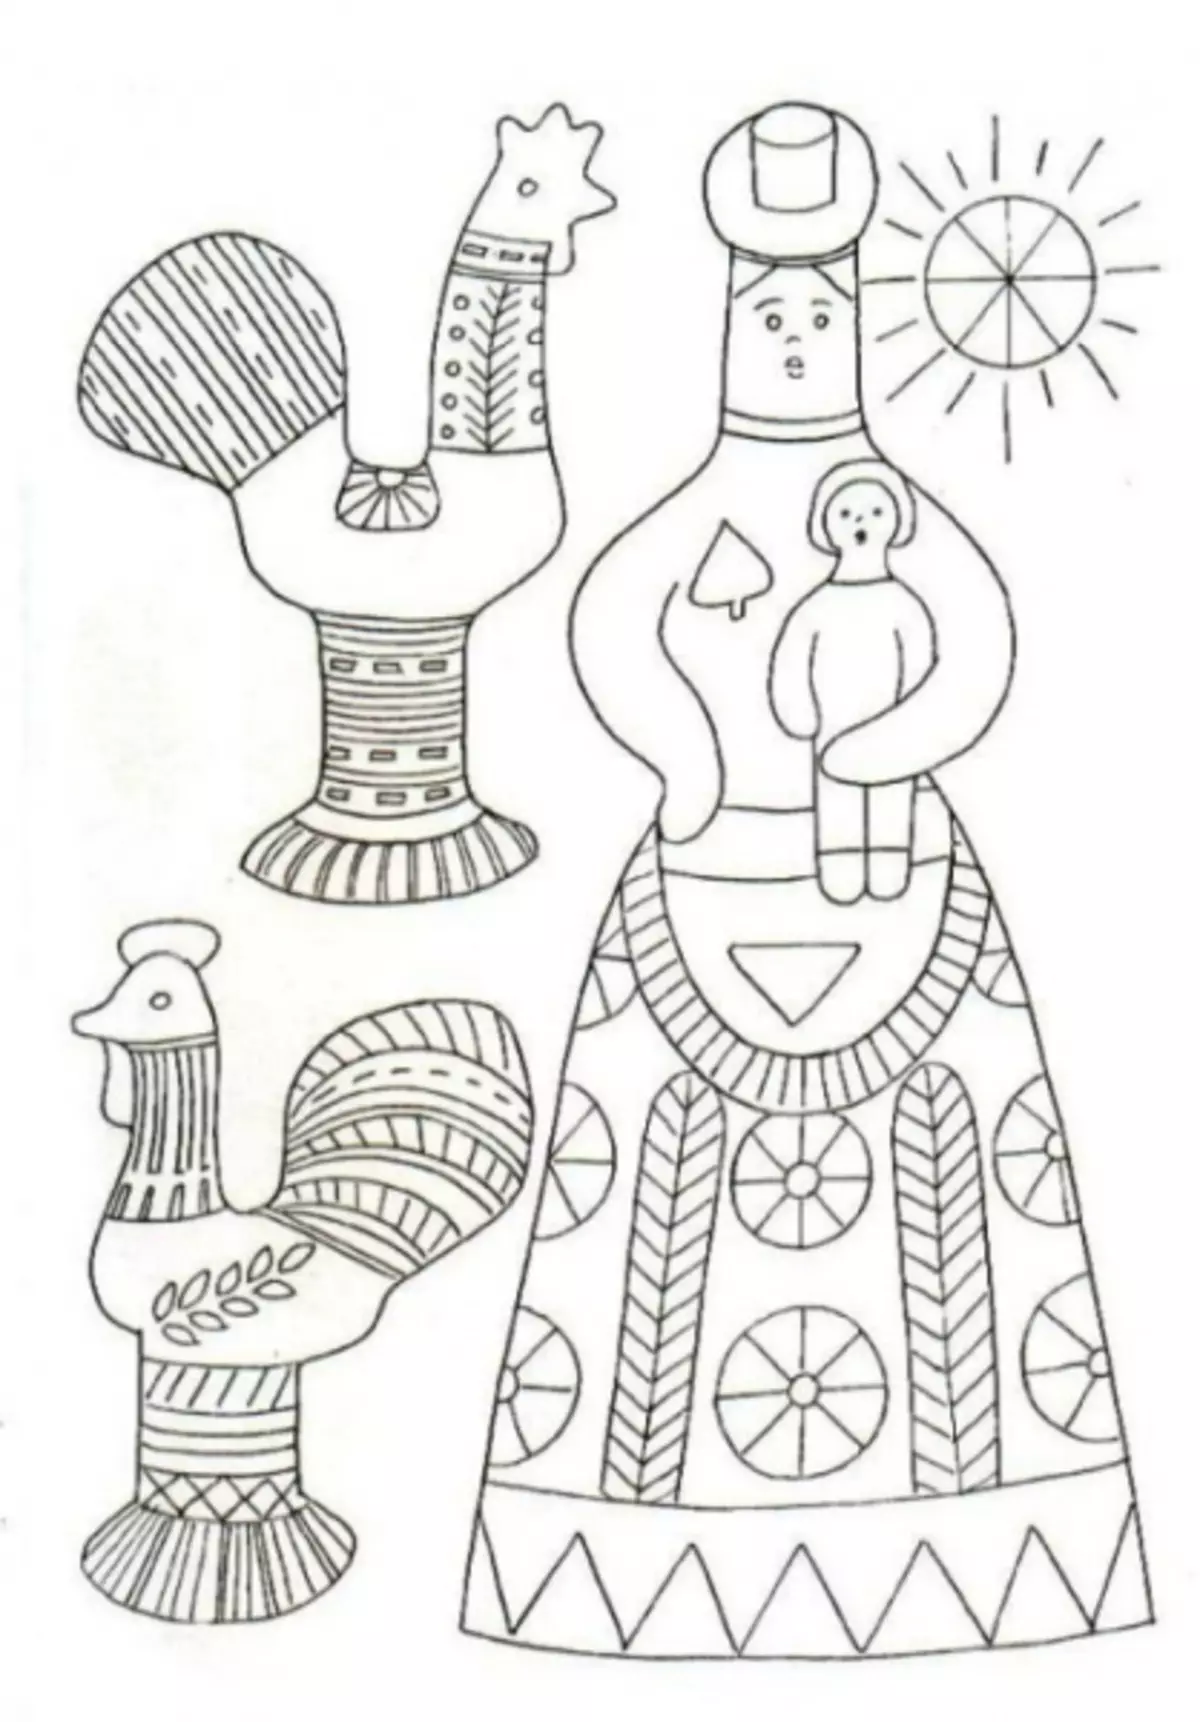 Filimonovsky ಟೆಂಪ್ಲೆಟ್ಗಳೊಂದಿಗೆ ಮಕ್ಕಳ ಹಂತಗಳಲ್ಲಿ ಮಾದರಿಗಳೊಂದಿಗೆ ಚಿತ್ರಕಲೆ